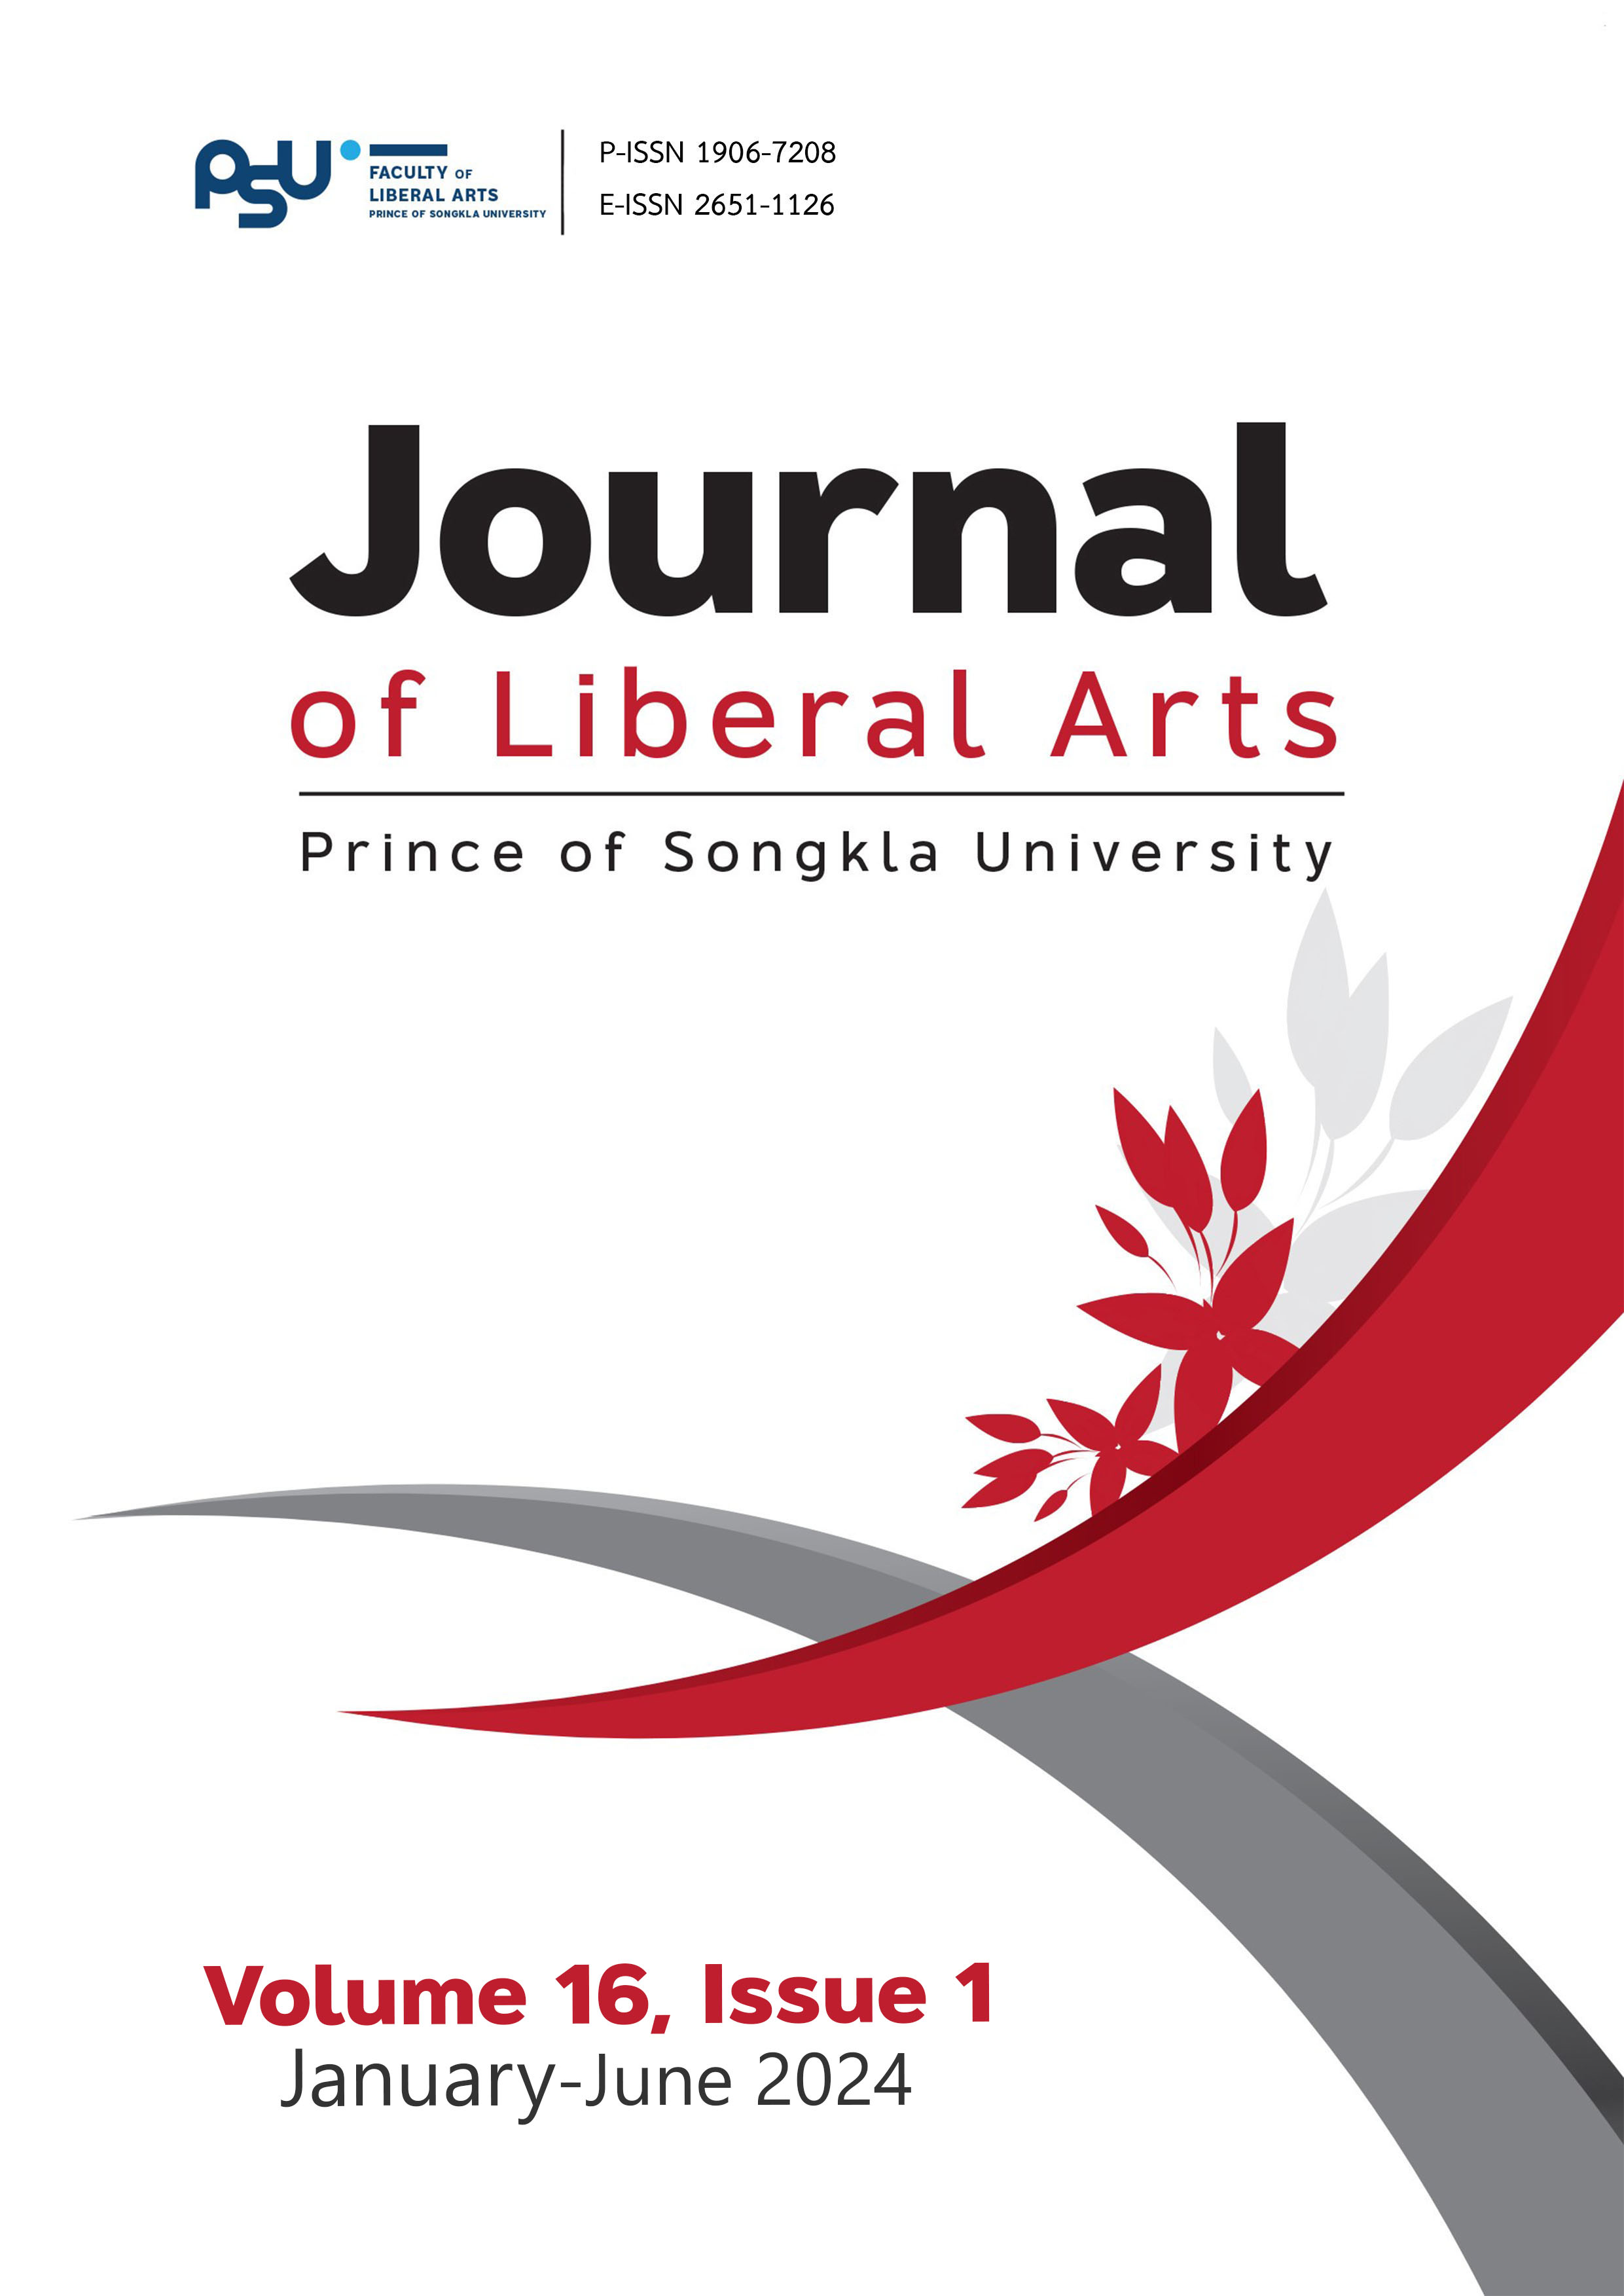 					View Vol. 16 No. 1 (2024): Journal of liberal Arts , Prince of Songkla University (In progress)
				